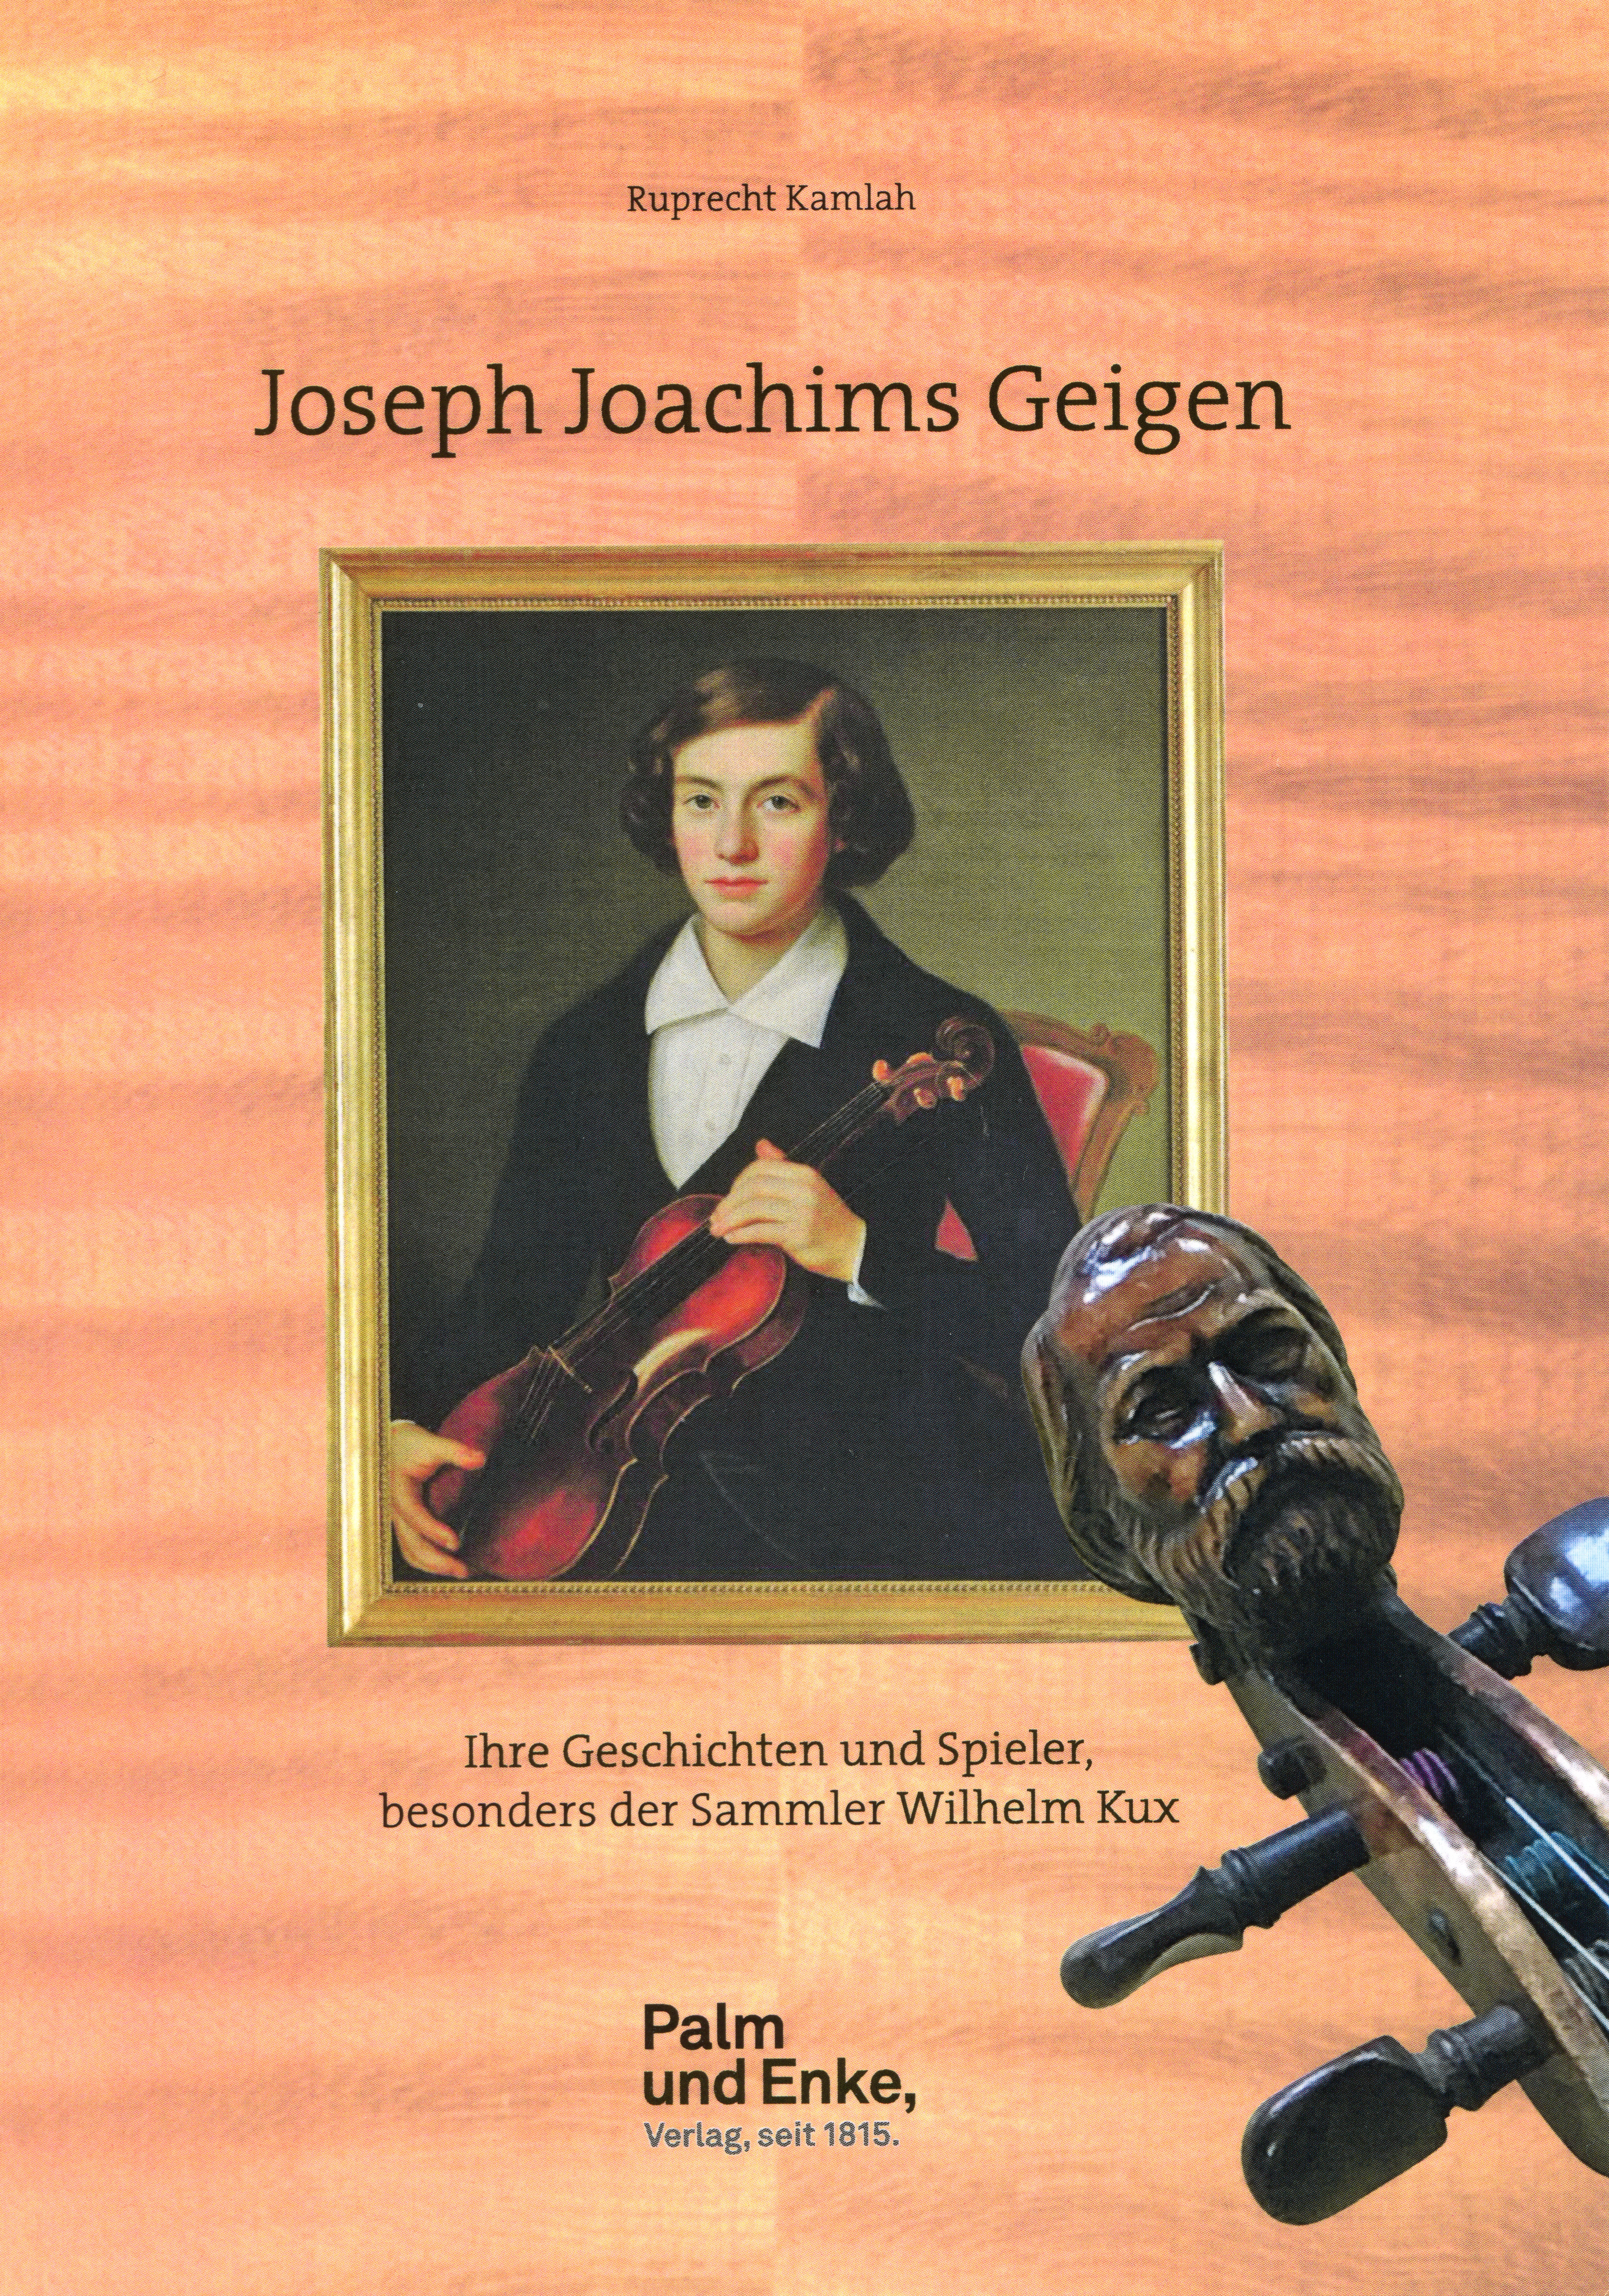 R. Kamlah - Joseph Joachims Geigen